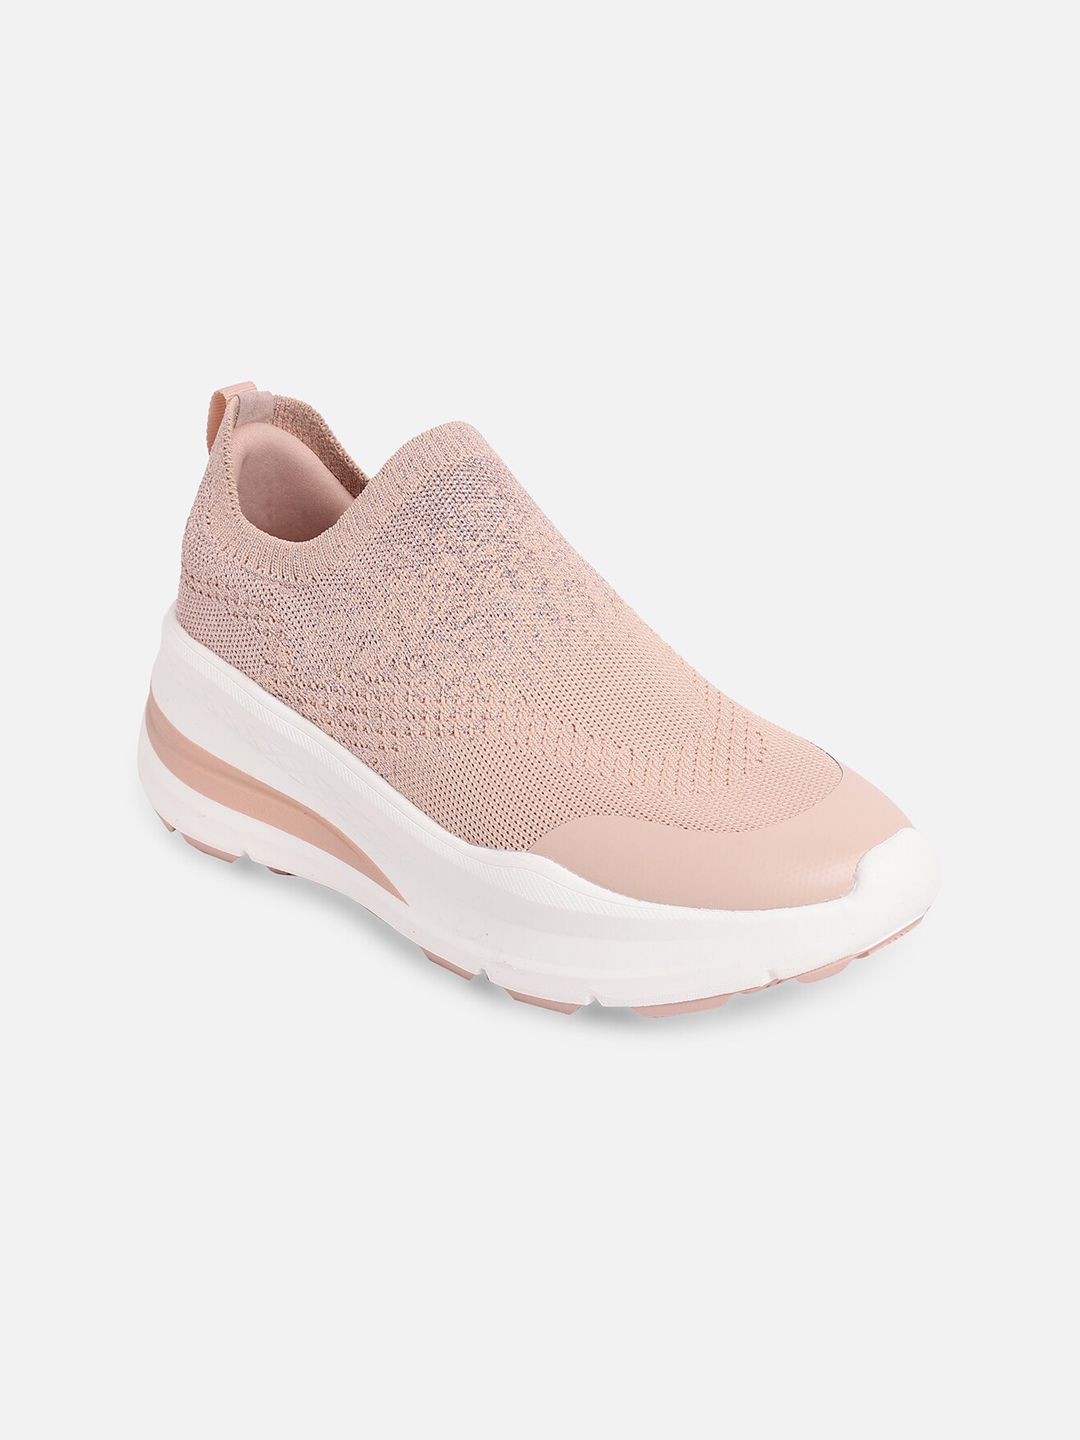 ALDO Women Solid Pink Slip-On Sneakers Price in India